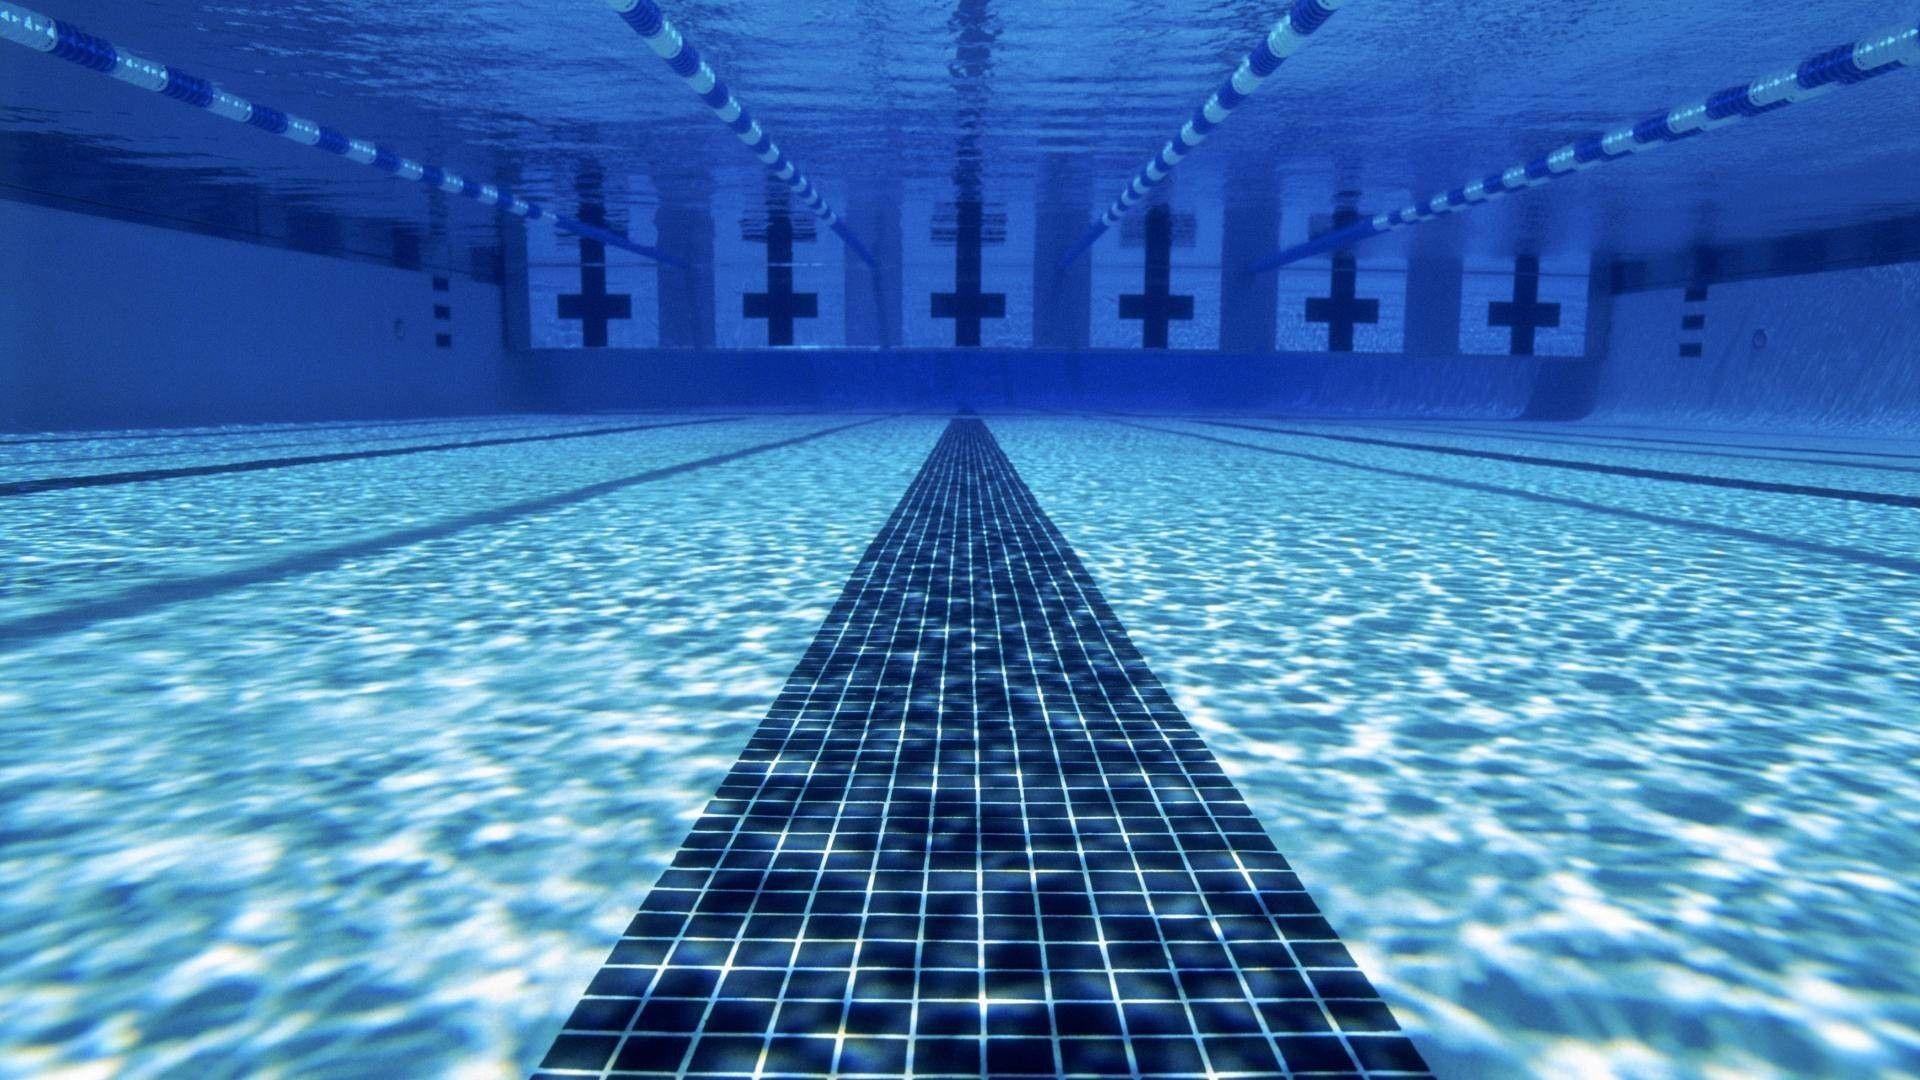 Swimming Pool Wallpaper Free Swimming Pool